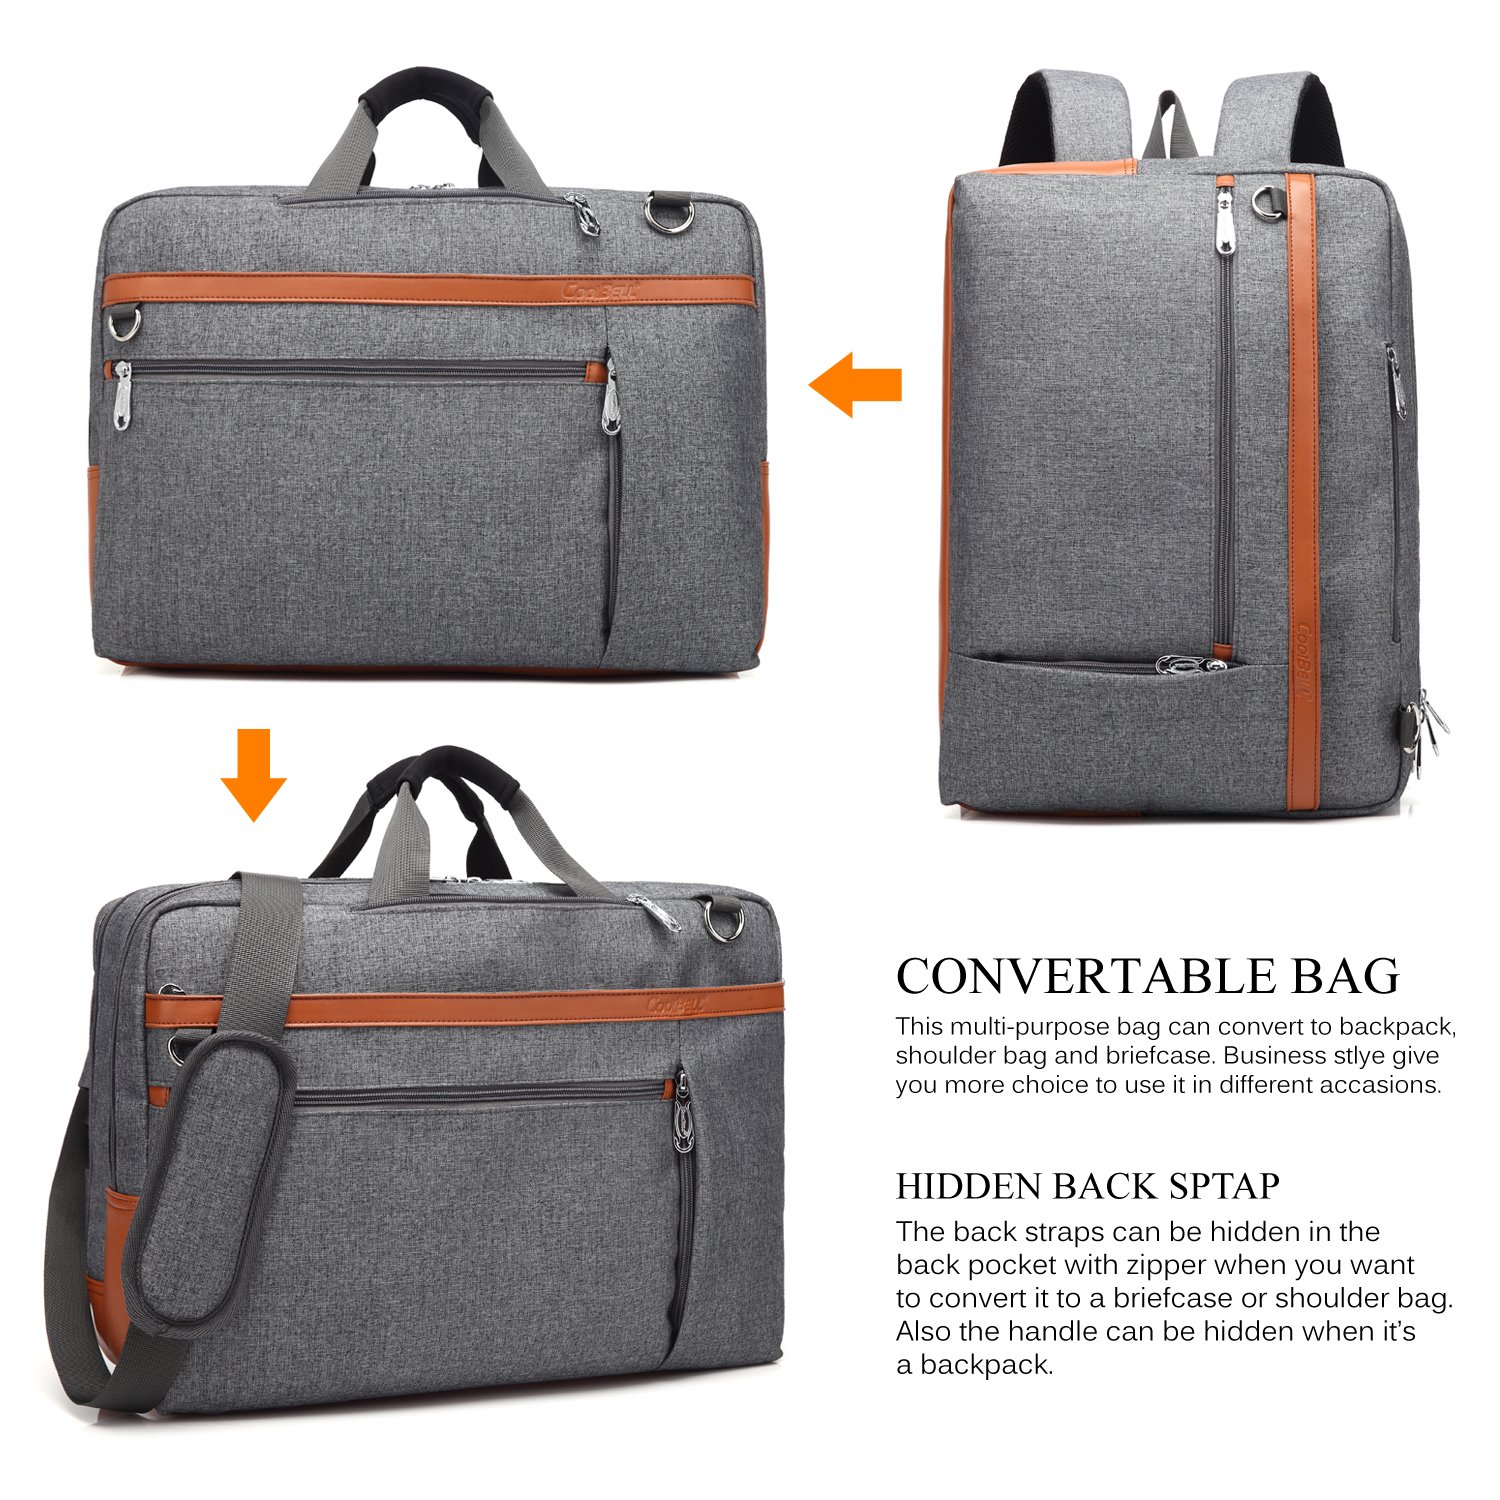 CoolBELL Convertible Backpack Shoulder bag Messenger Bag Laptop Case Business Briefcase Leisure Handbag Multi-functional Travel Rucksack Fits 17.3 Inch Laptop For Men/Women/Travel (New Grey)